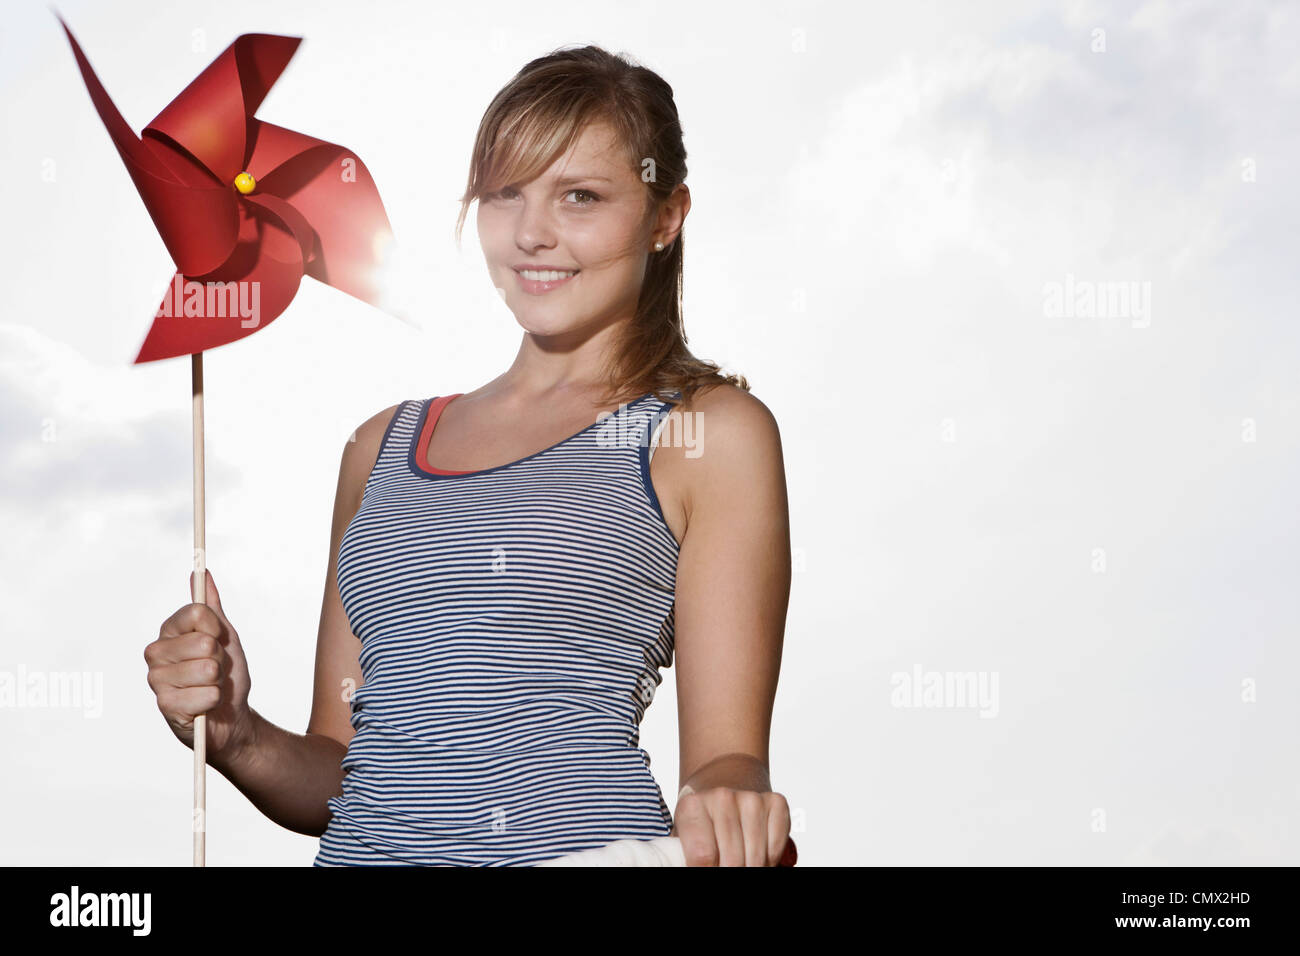 Deutschland, Köln, junge Frau mit Windrad, Lächeln, Porträt Stockfoto